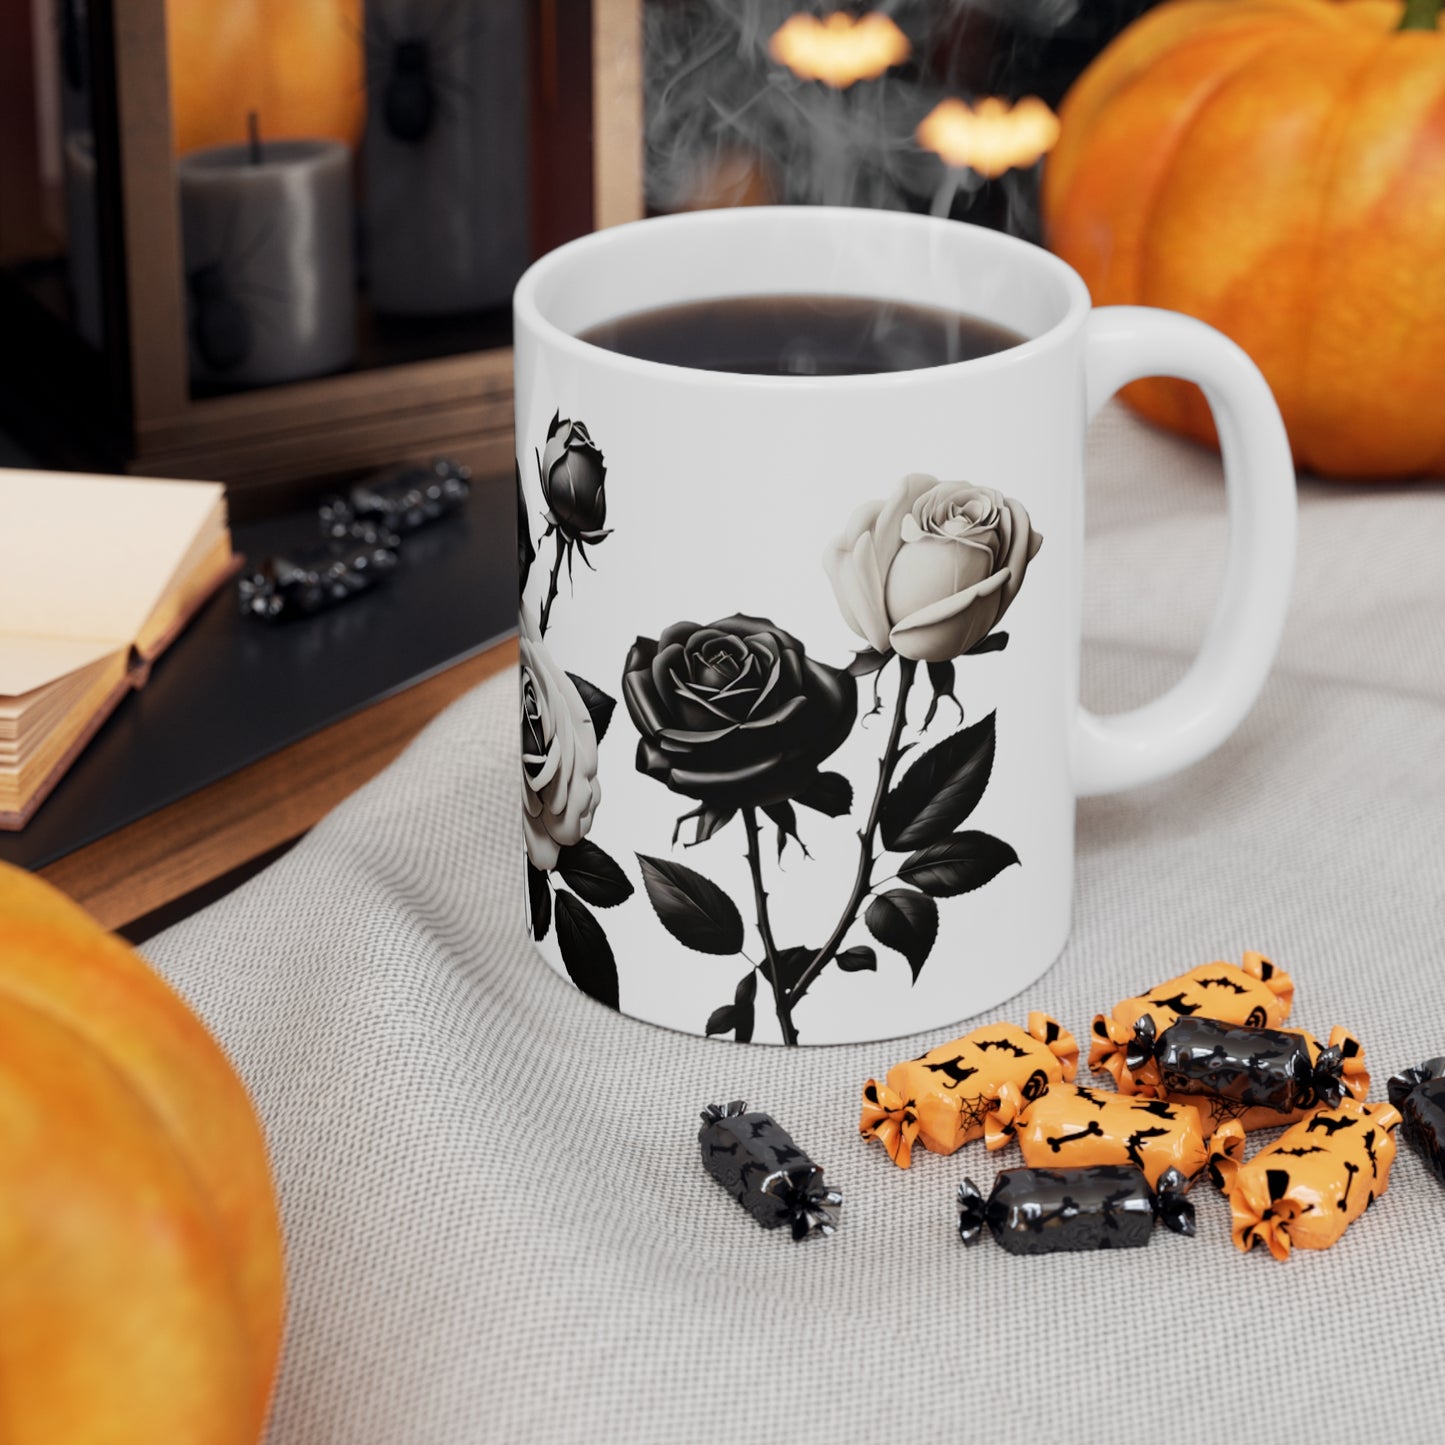 Black and White Roses Mug - Ceramic Coffee Mug 11oz